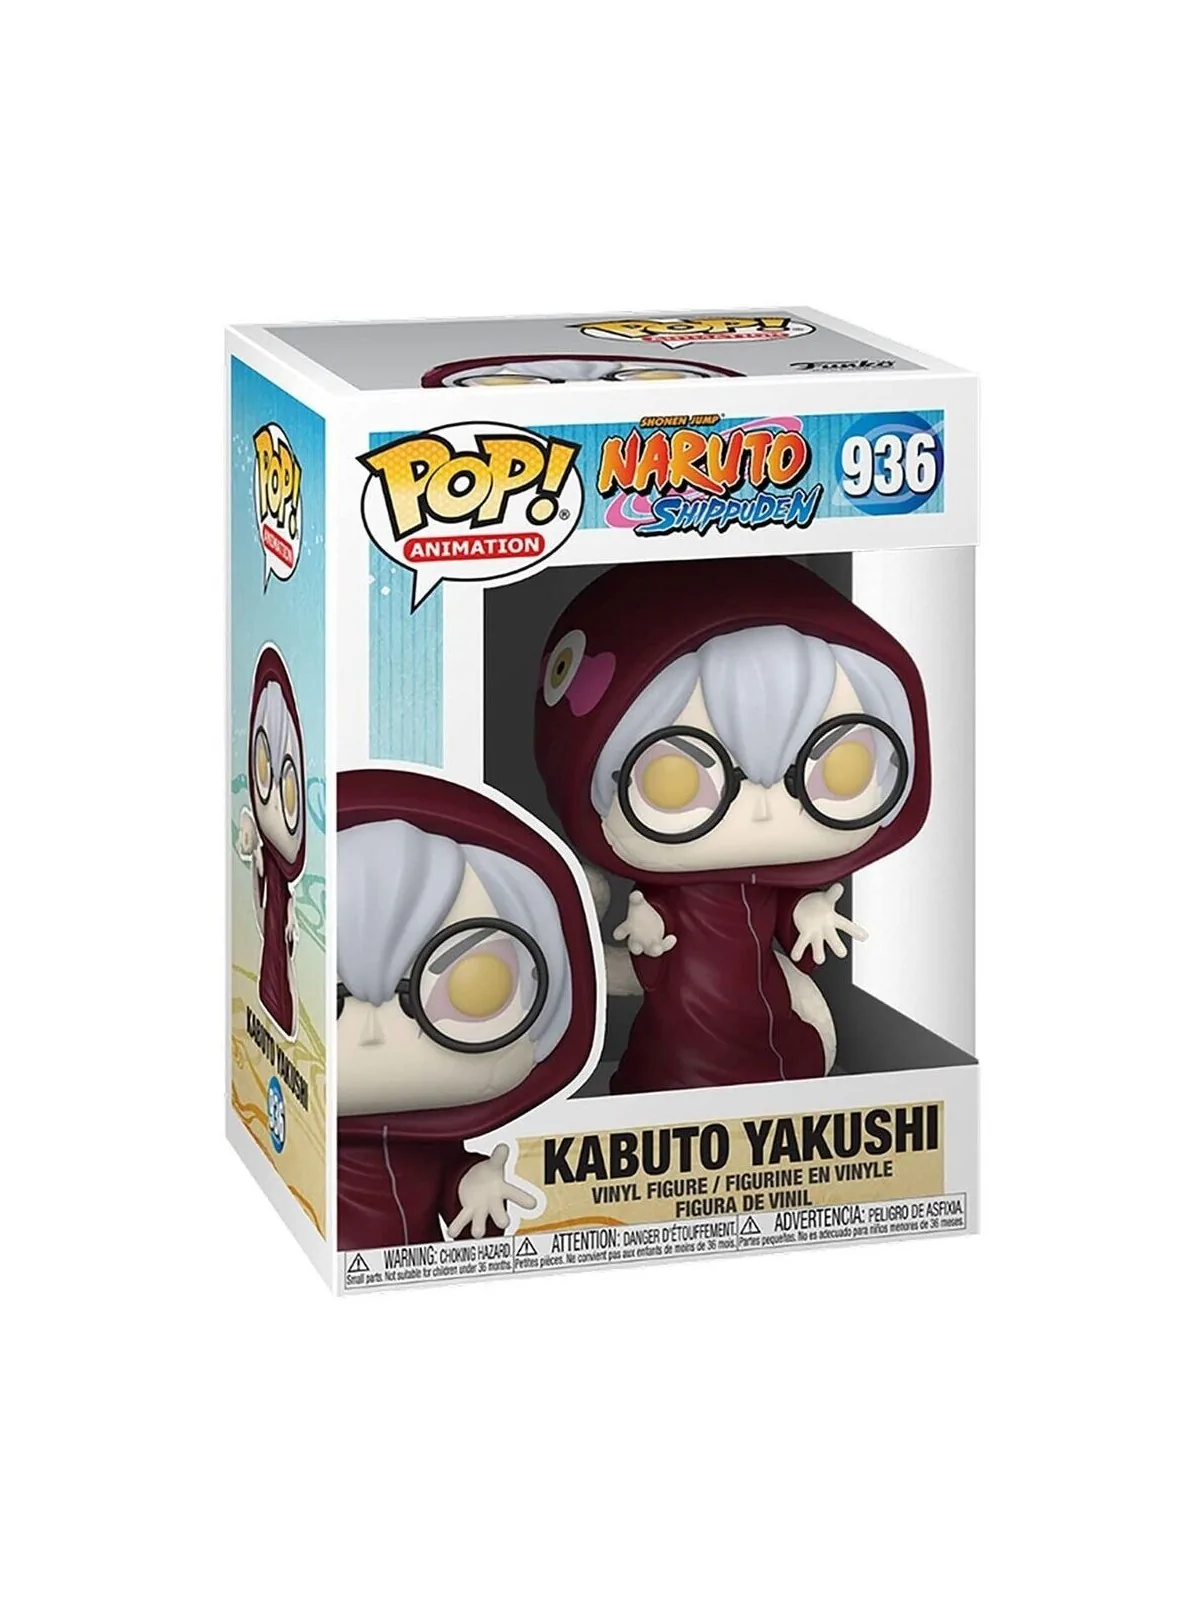 Comprar Funko POP! Naruto: Kabuto Yakushi (936) barato al mejor precio